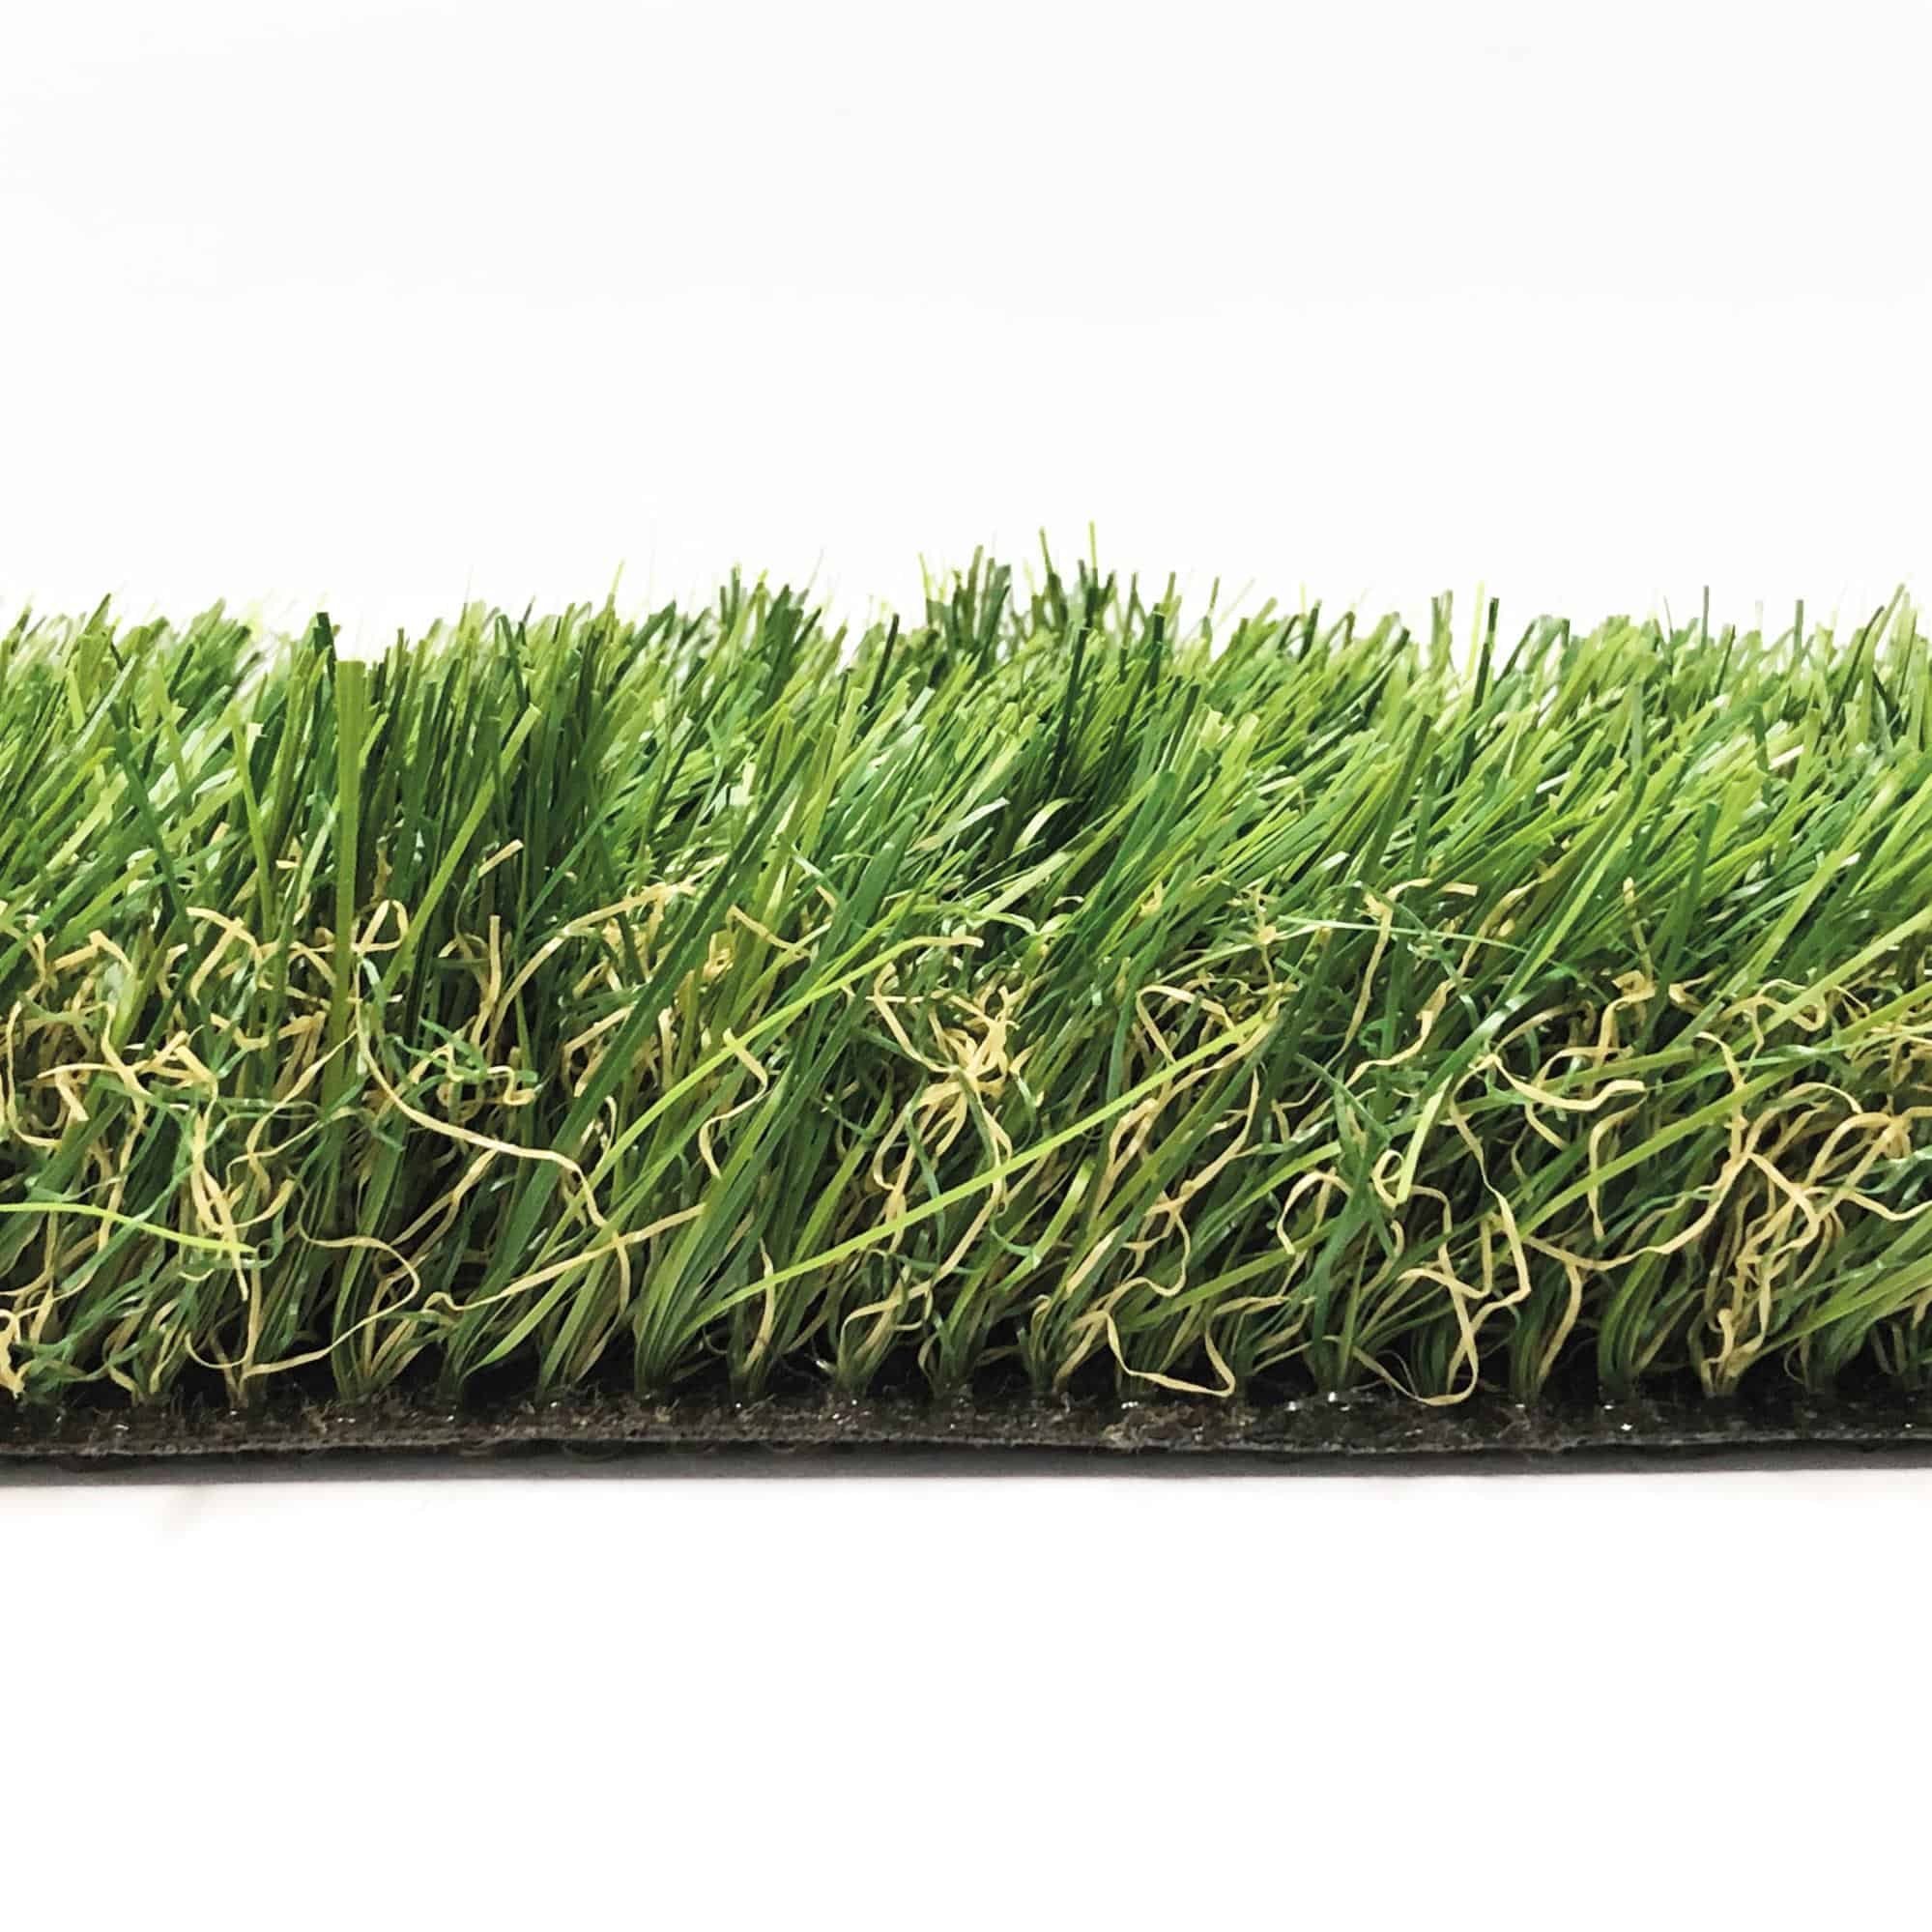 CORE Lawn Natural Artificial Grass 4m Wide Roll 10 m